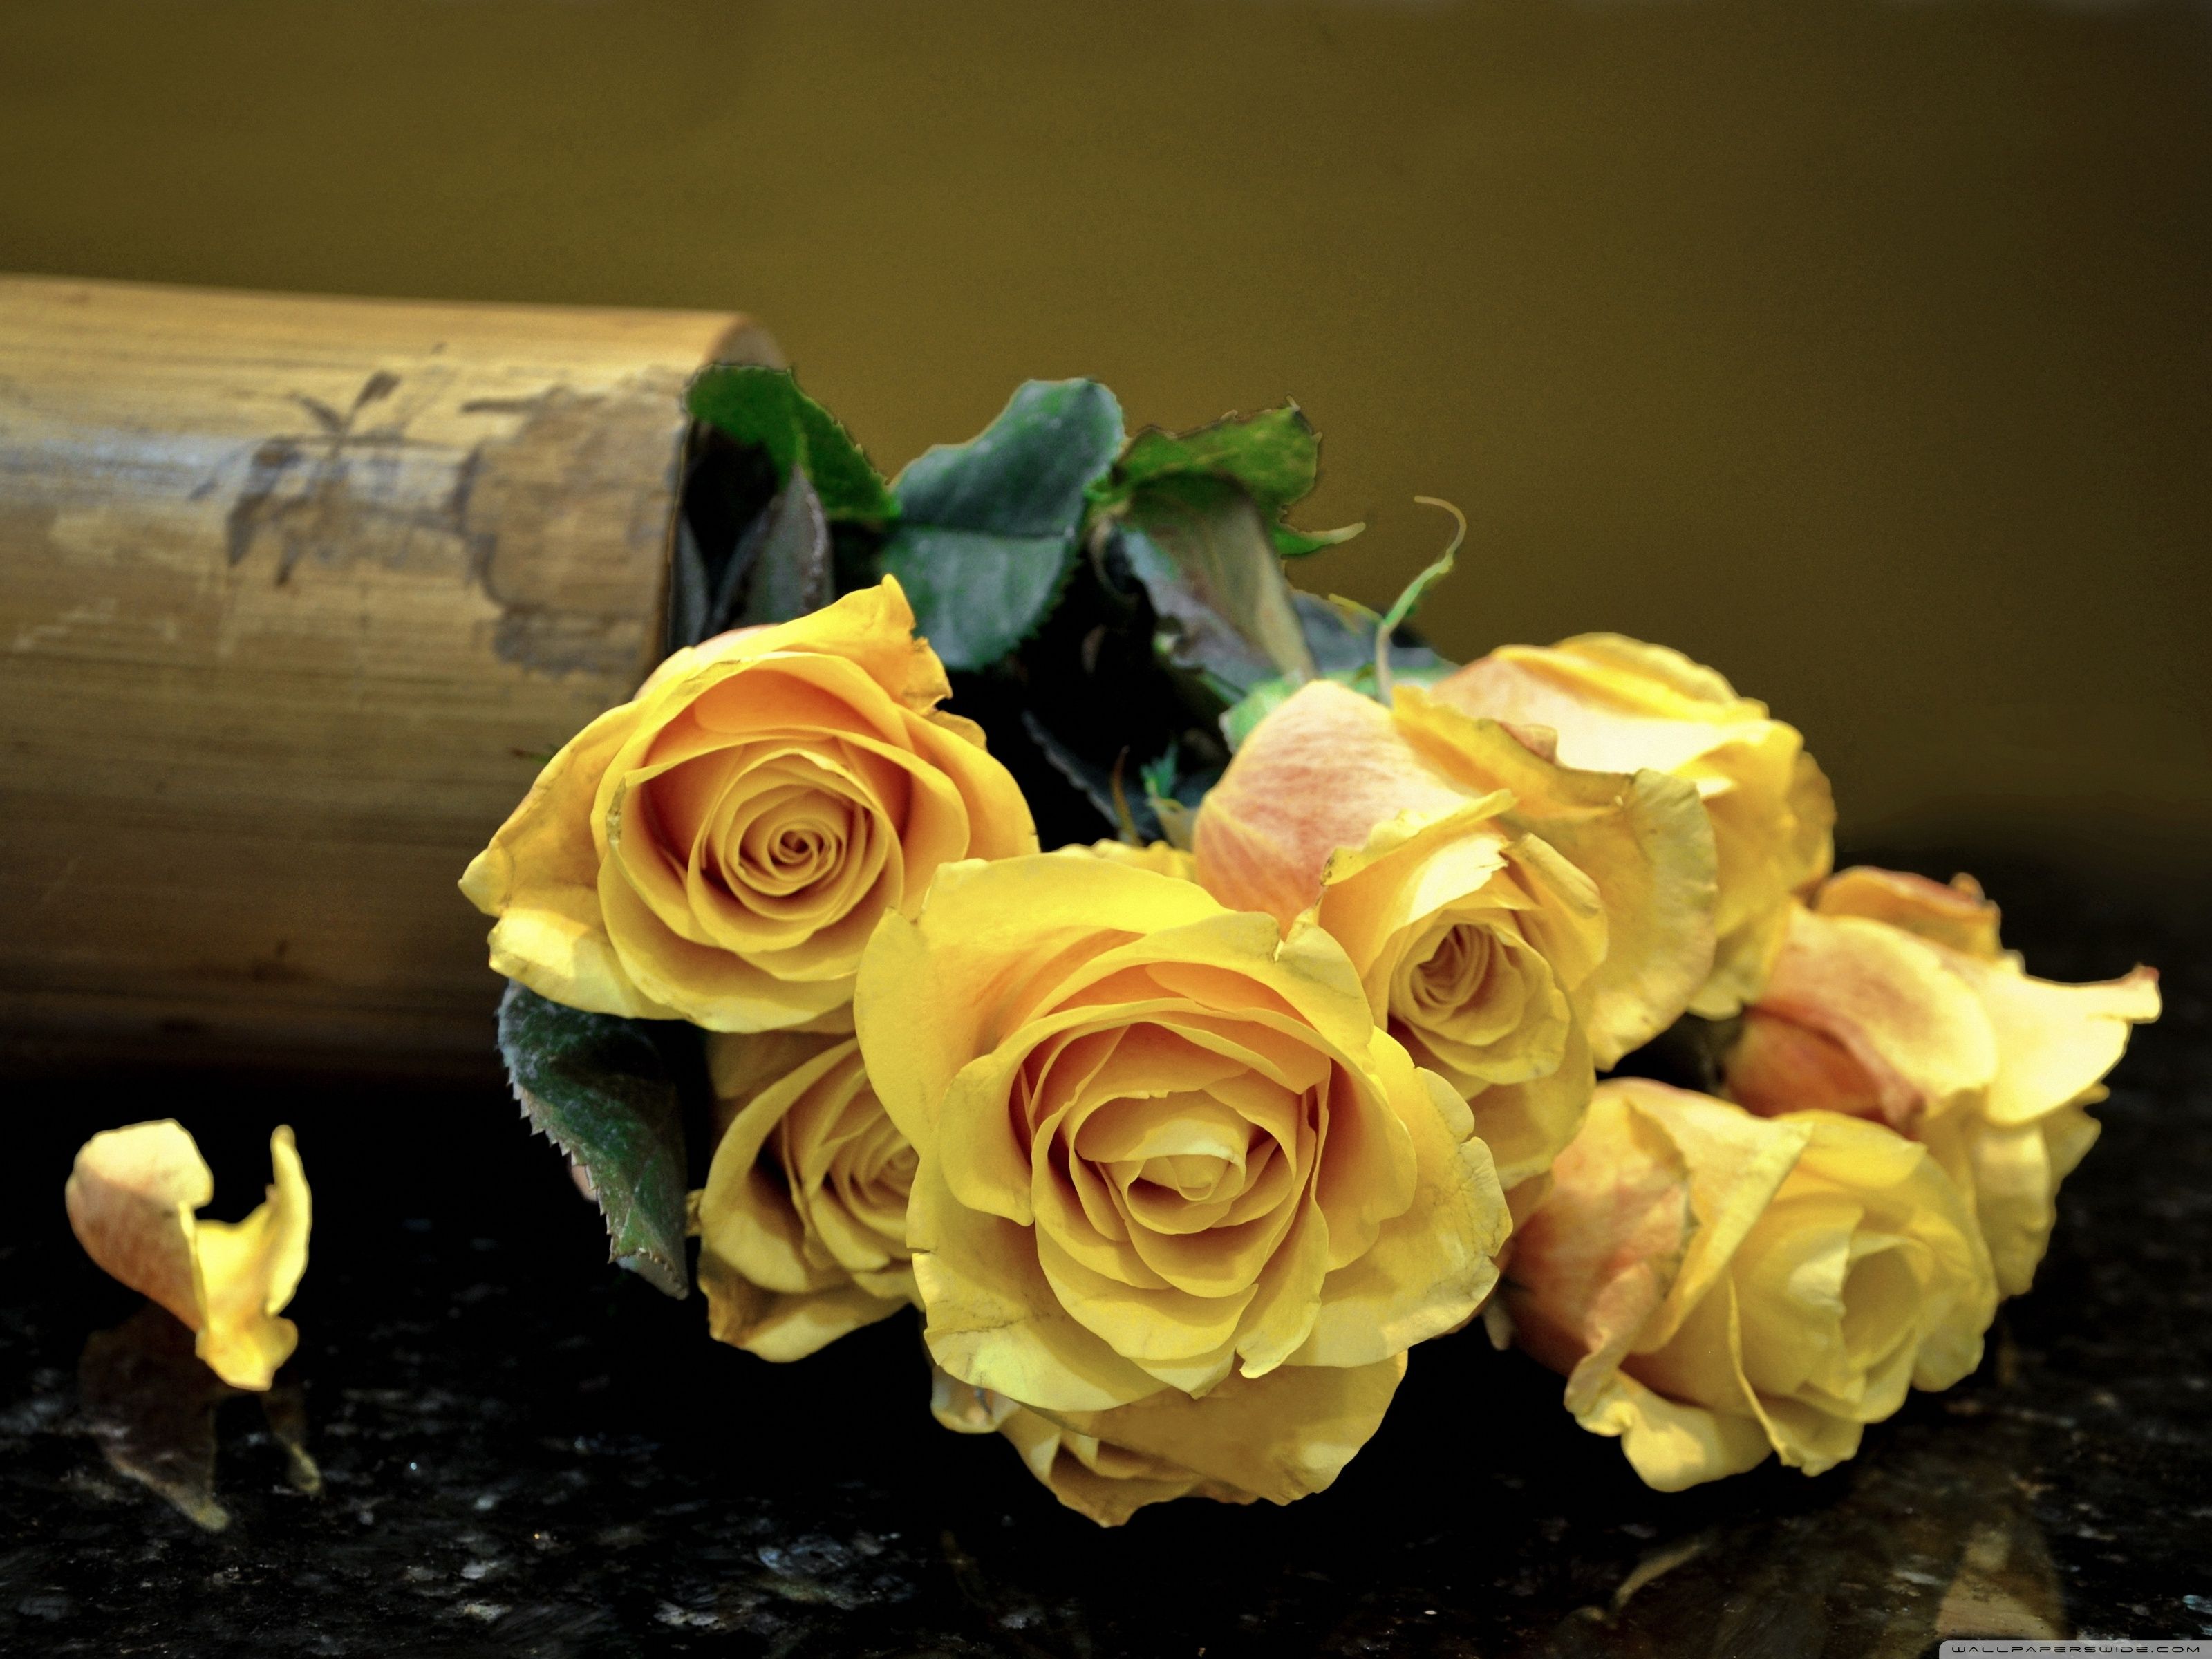 yellow roses wallpaper desktop background